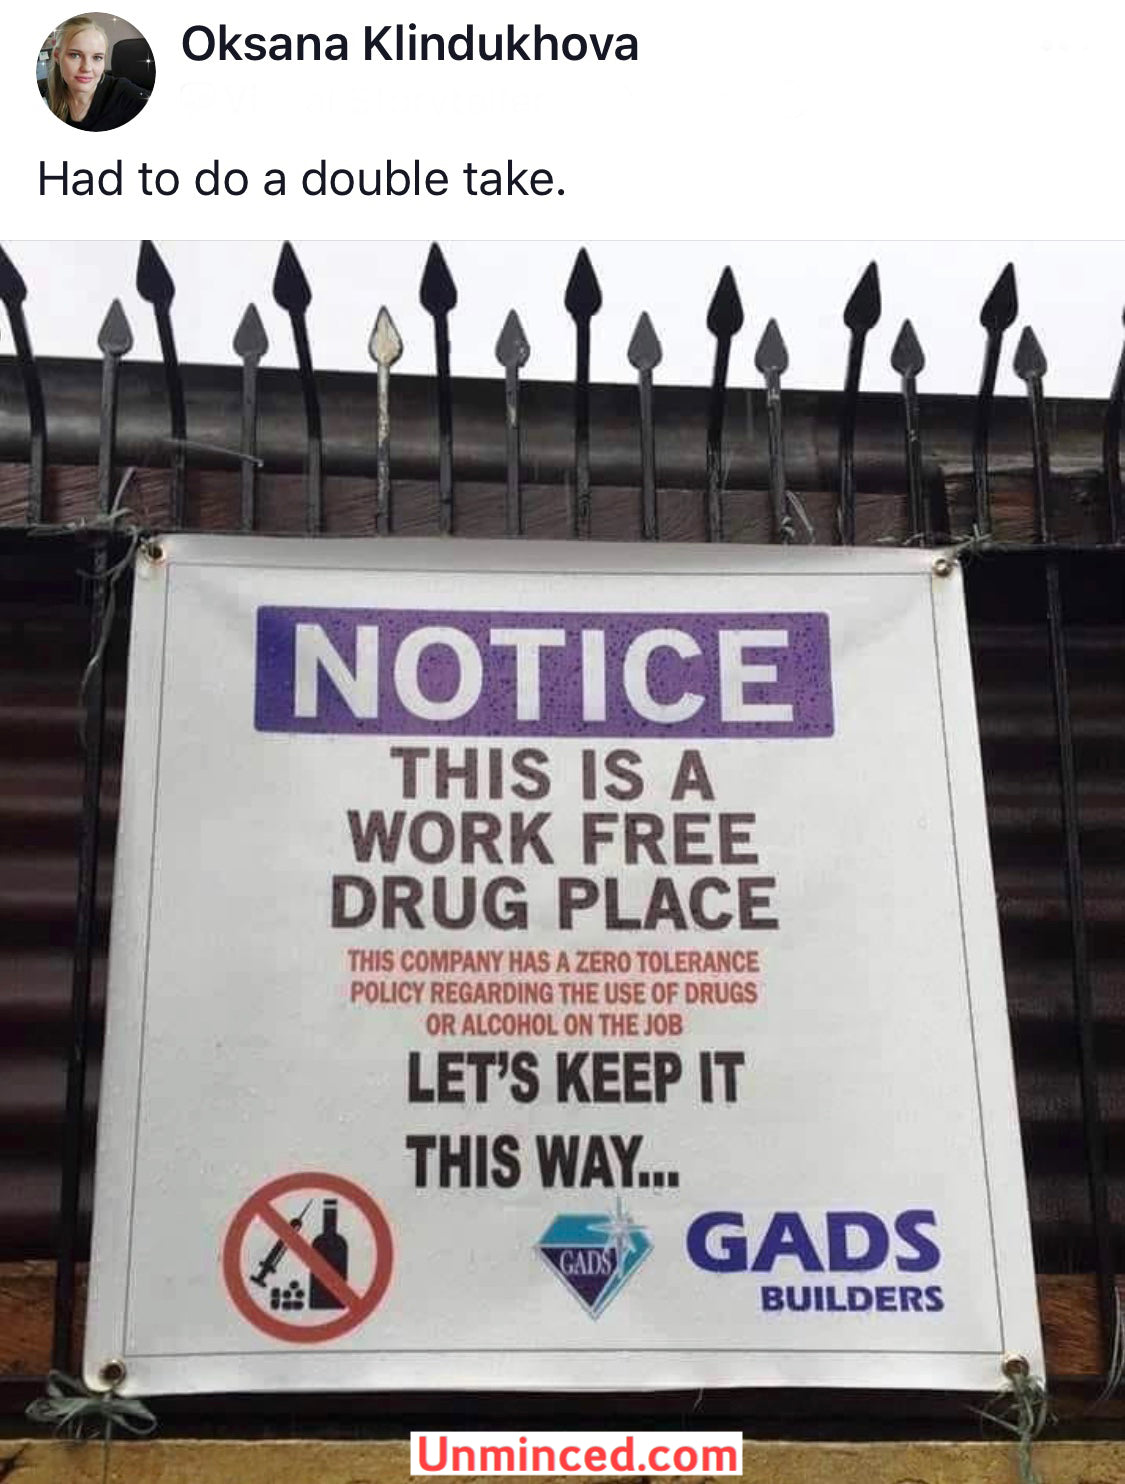 Work Free Drug Place?!